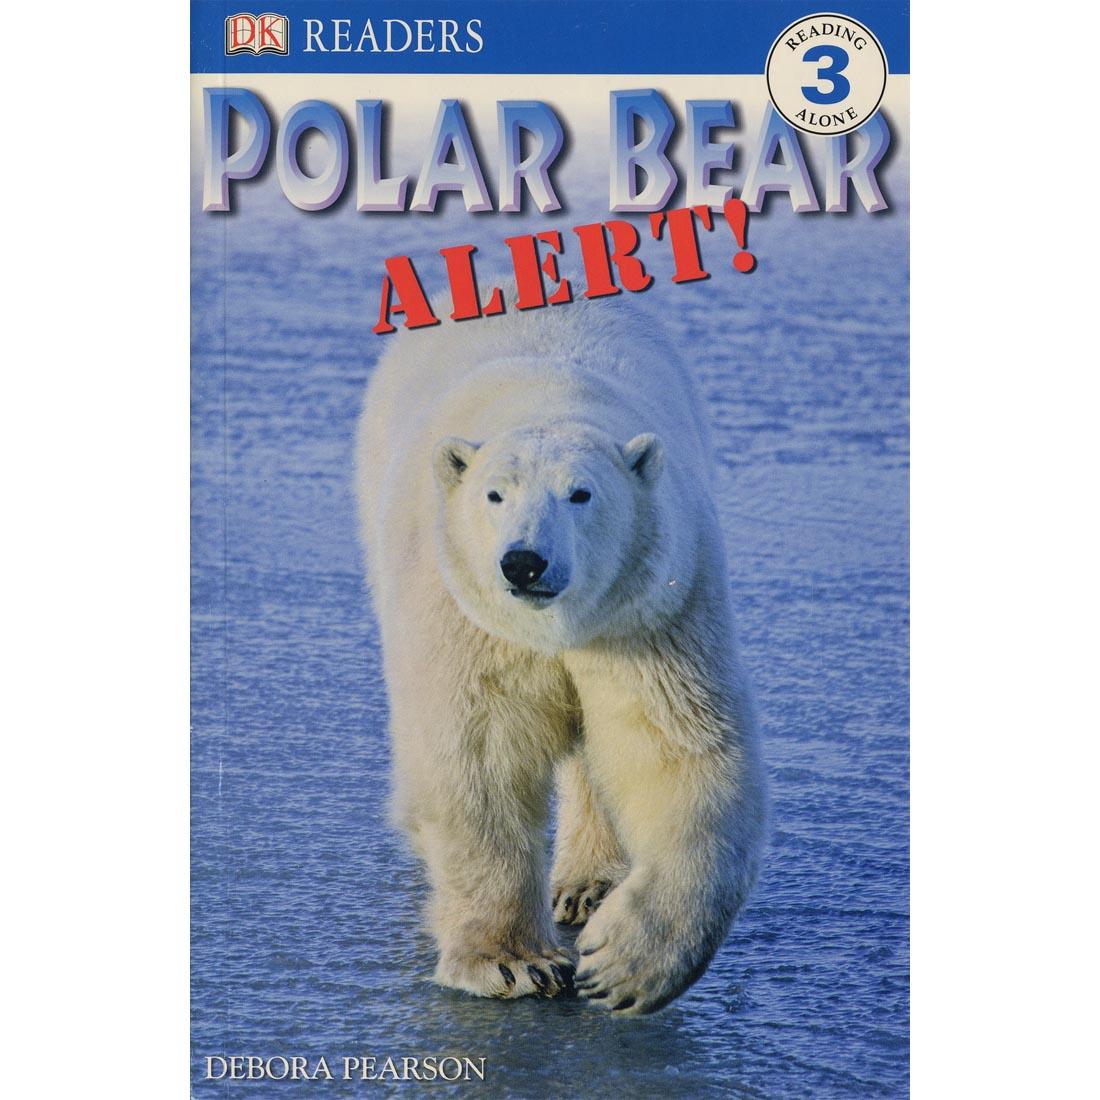 DK Readers Level 3 Book: Polar Bear Alert